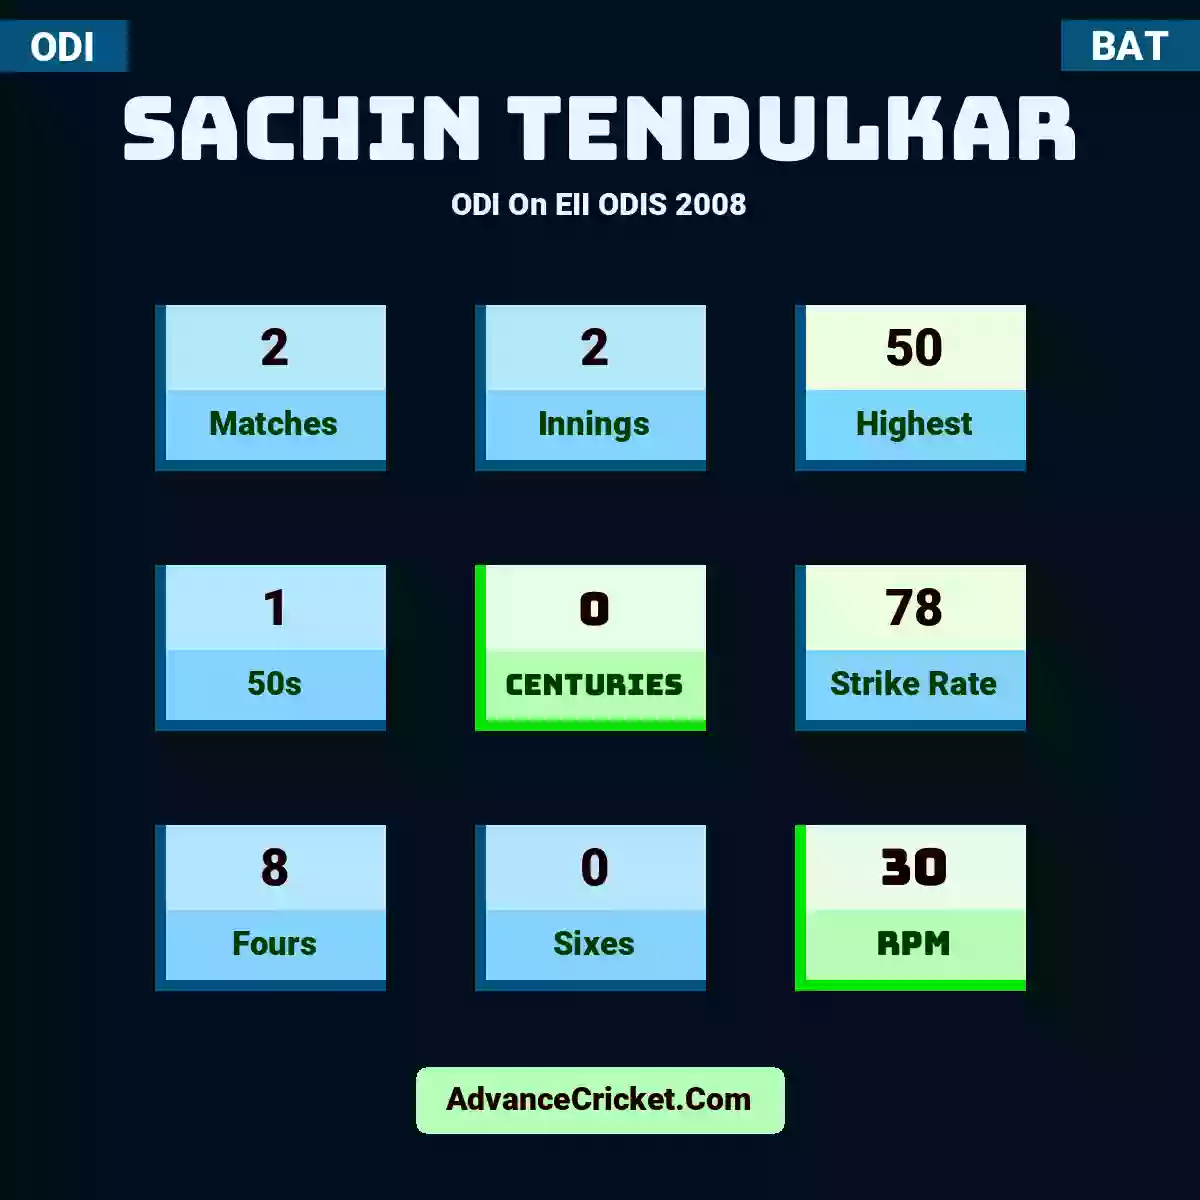 Sachin Tendulkar ODI  On EII ODIS 2008, Sachin Tendulkar played 2 matches, scored 50 runs as highest, 1 half-centuries, and 0 centuries, with a strike rate of 78. S.Tendulkar hit 8 fours and 0 sixes, with an RPM of 30.